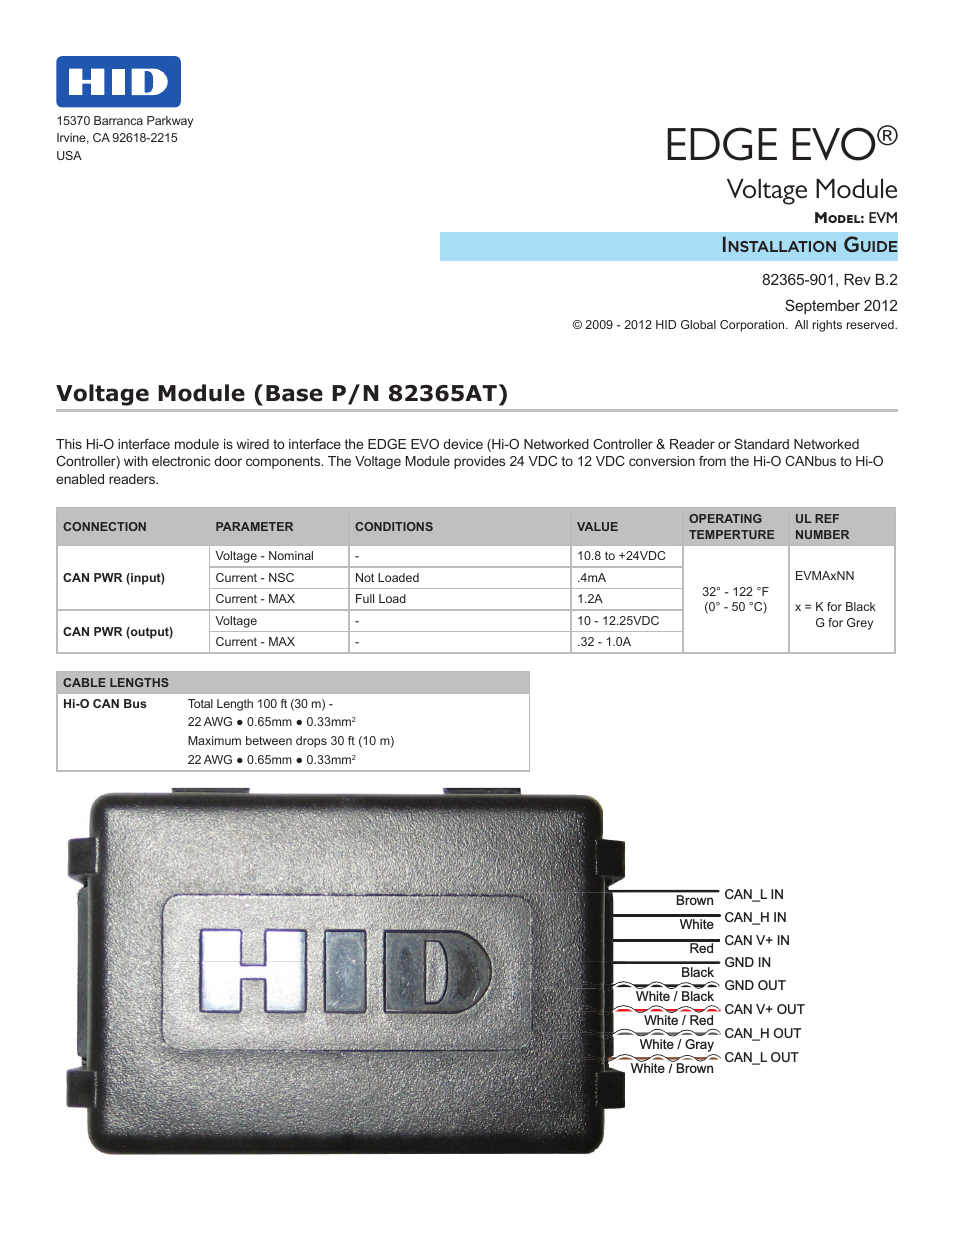 EDGE EVO EVM Voltage Module Installation Guide